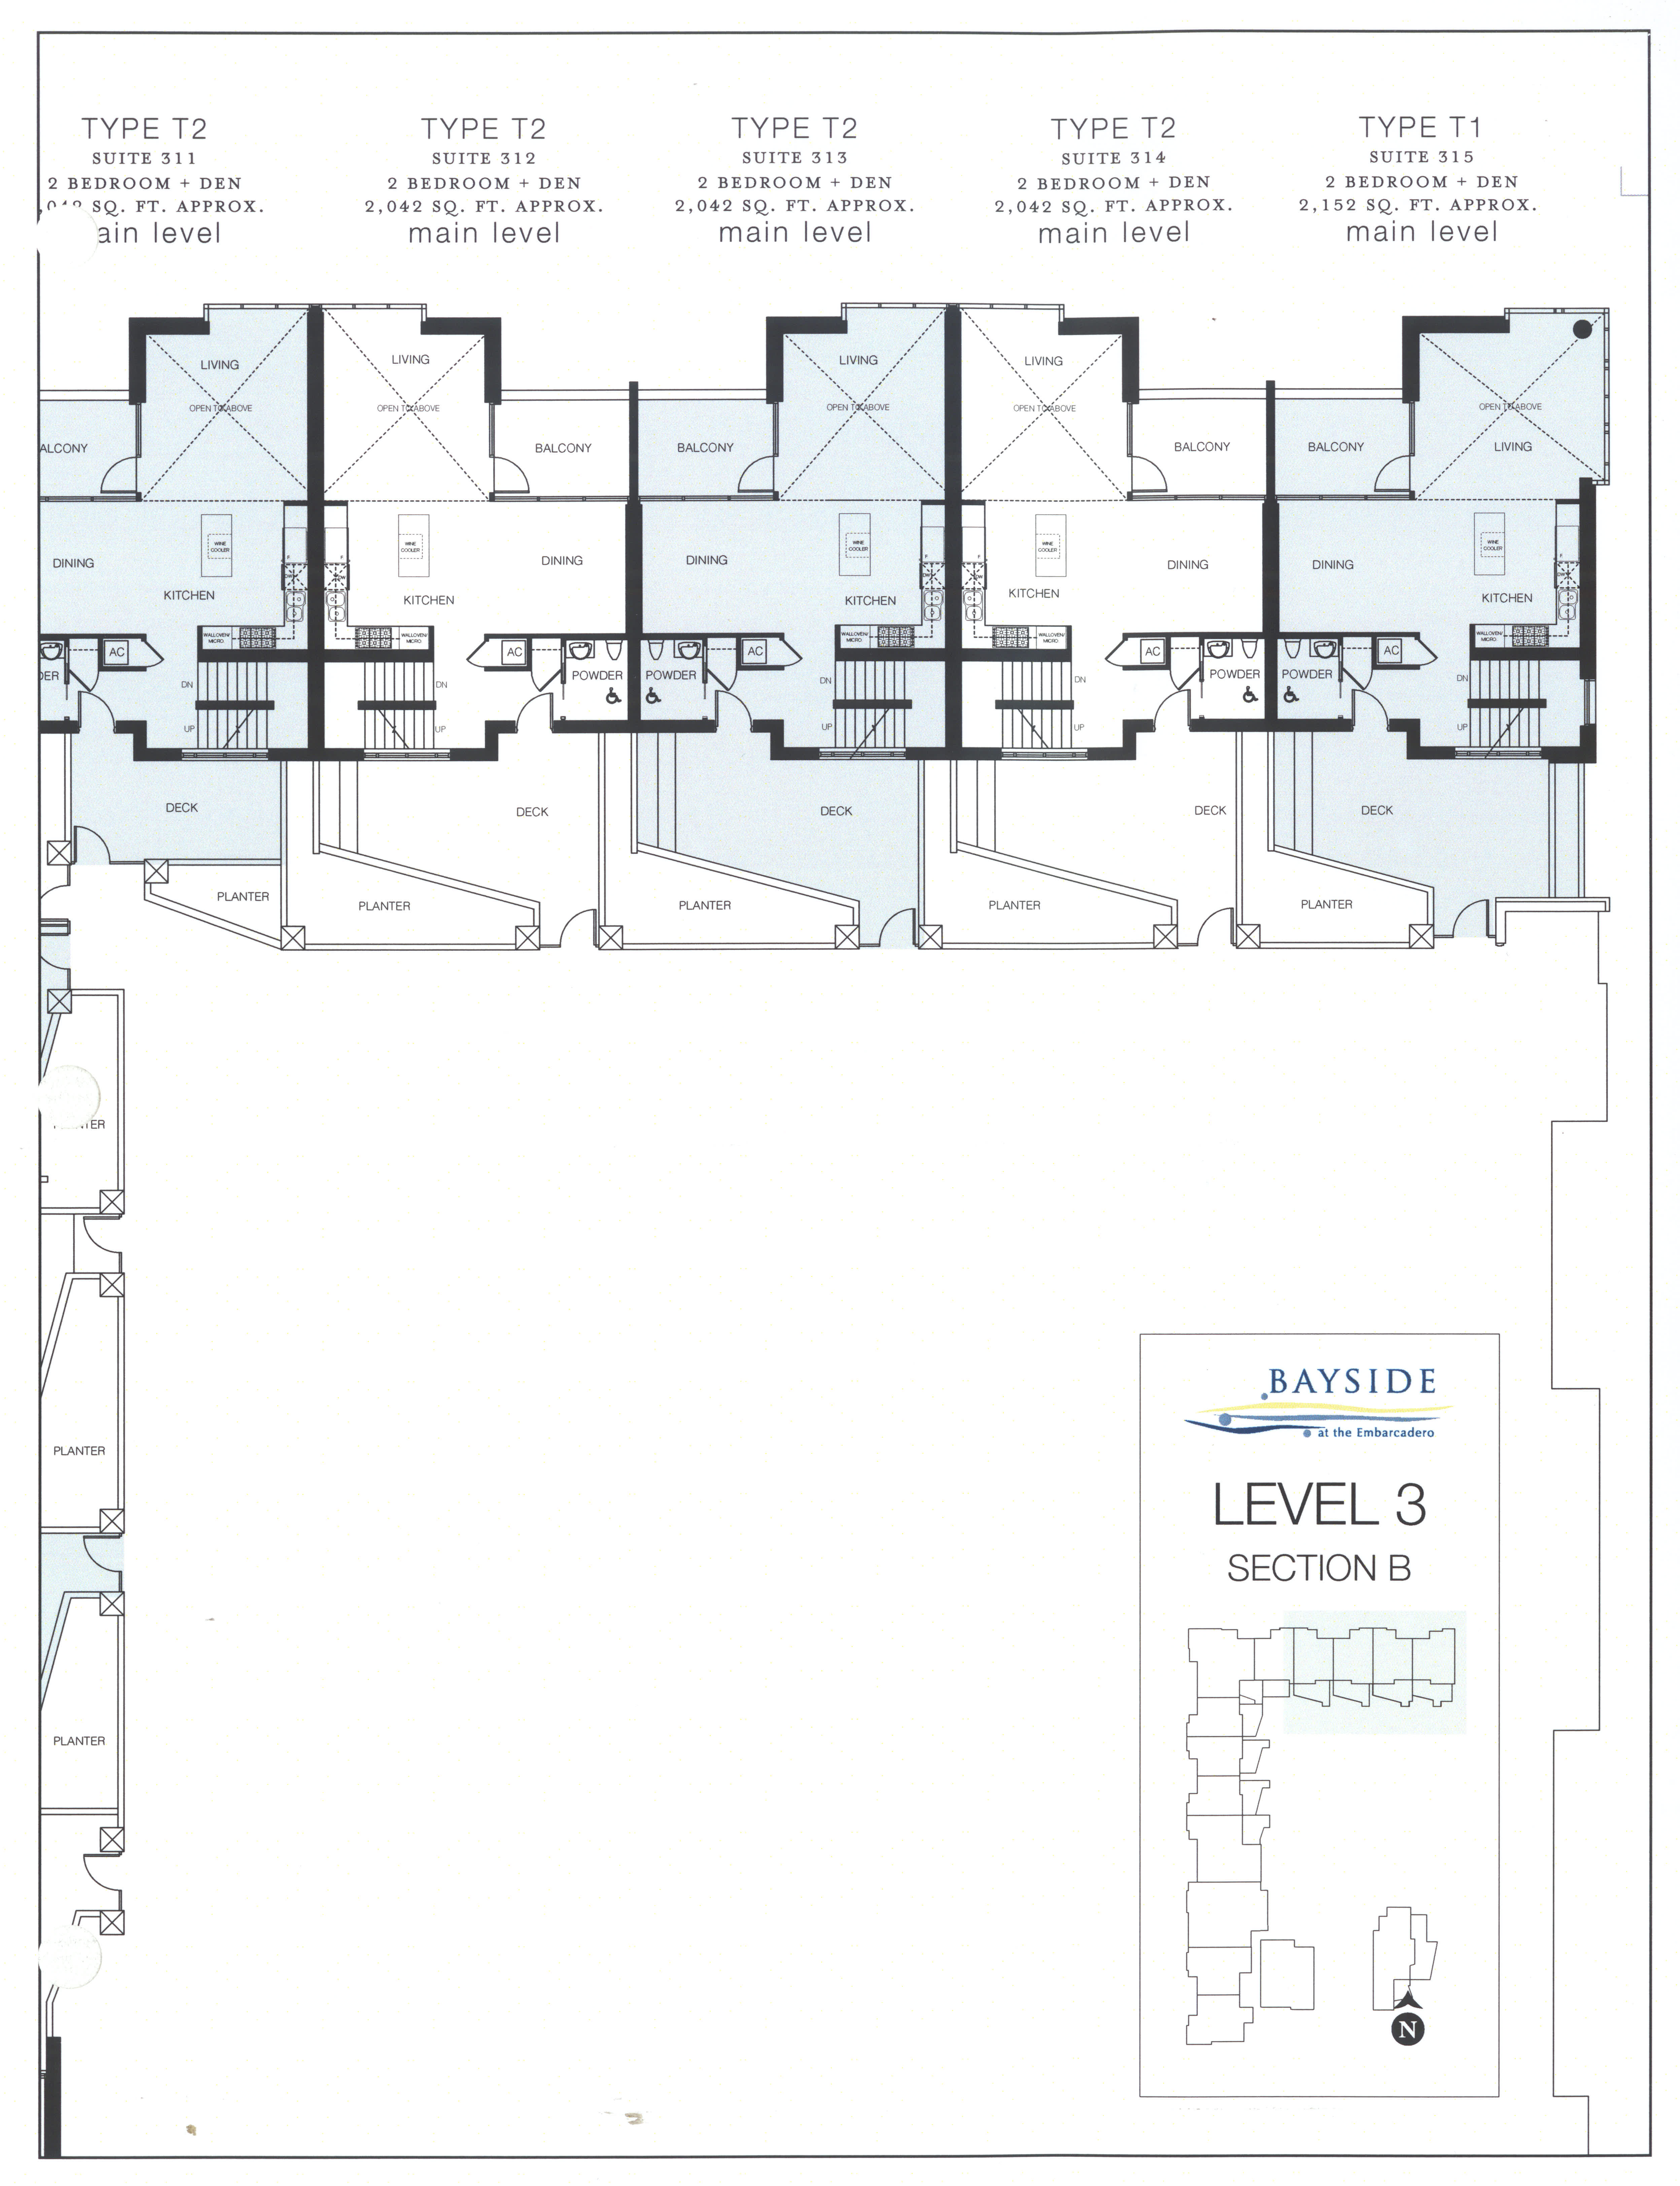 Bayside Floor Plan Level 3 Section B